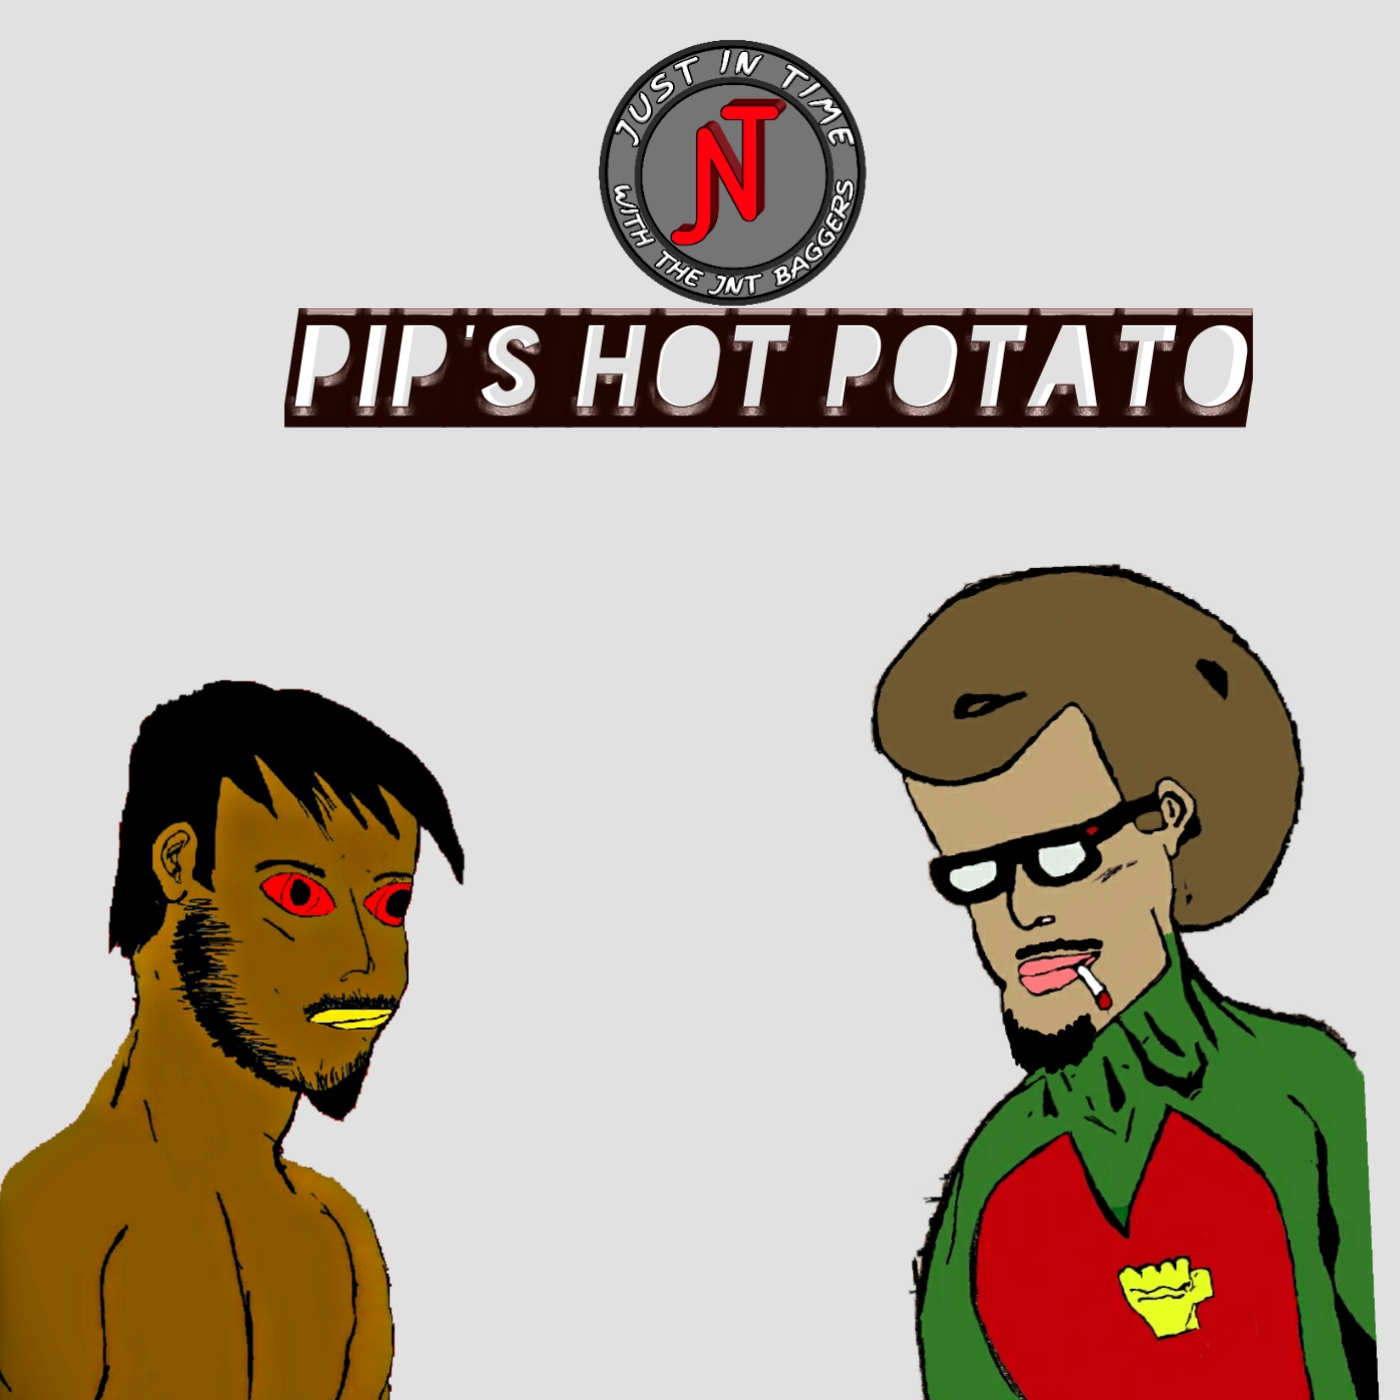 Pip's Hot Potato